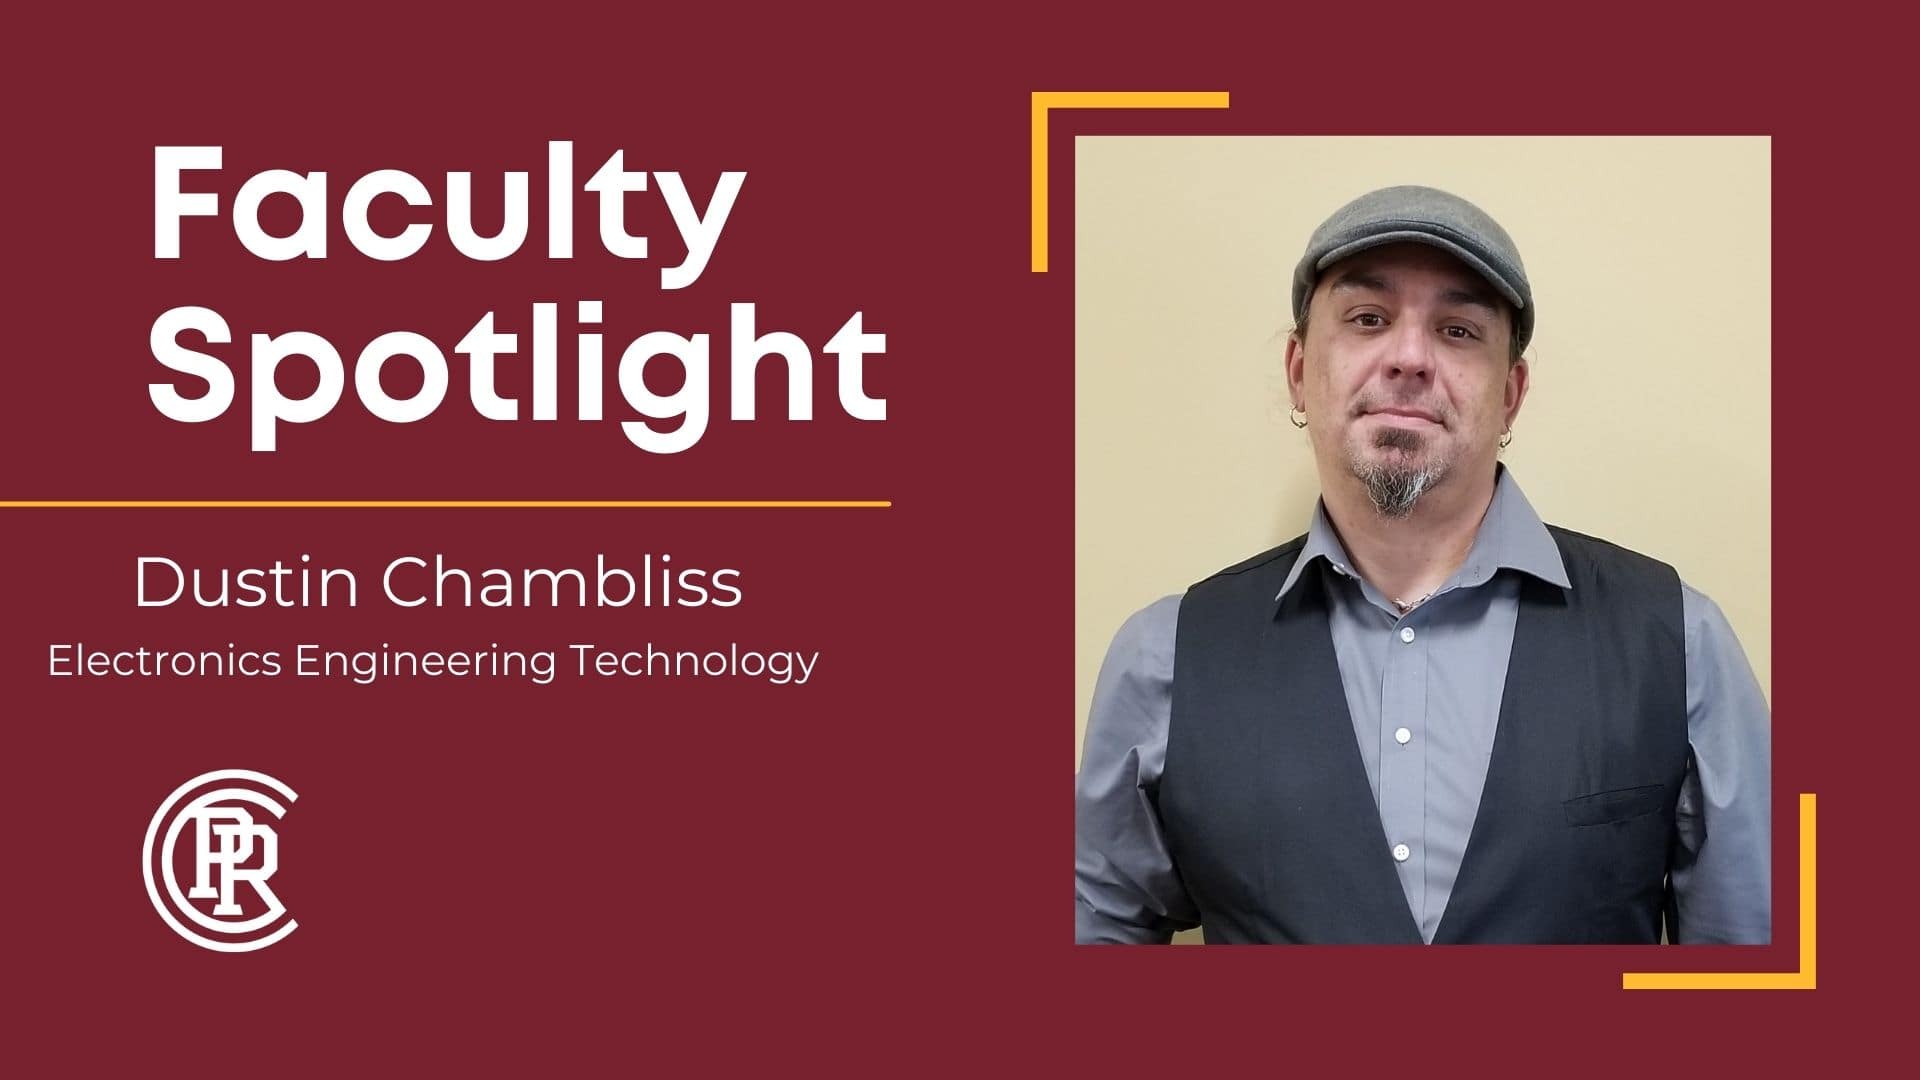 Dustin Chambliss PRCC Electronics Engineering Technology instructor